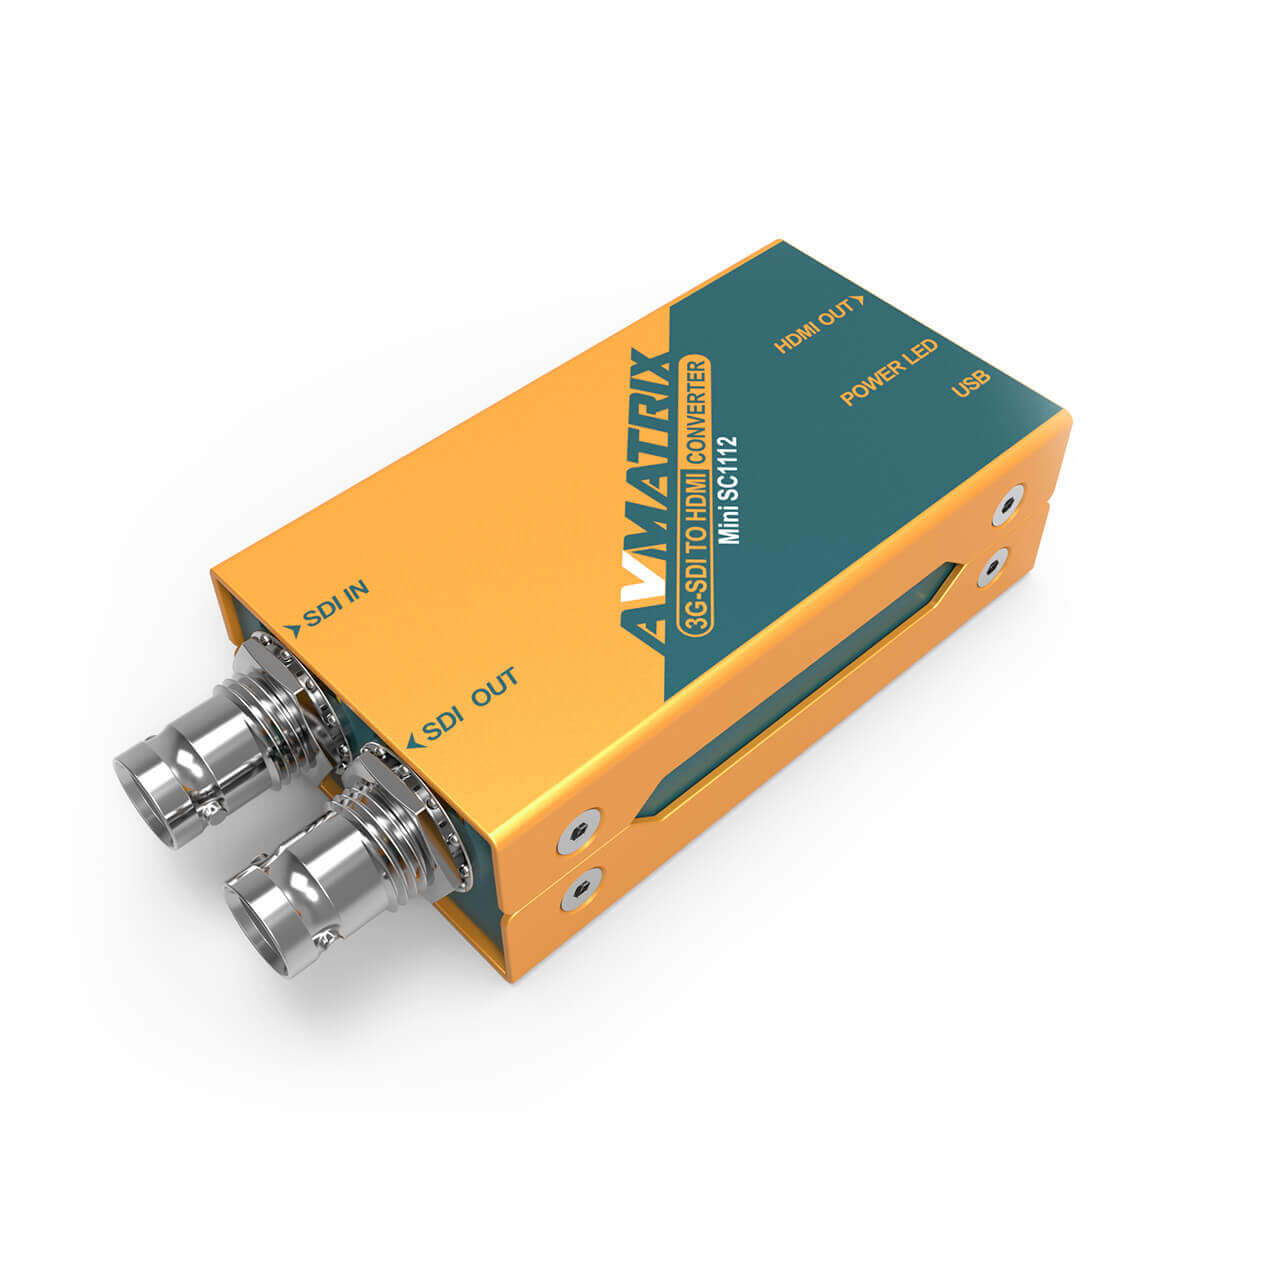 Avmatrix SC2031 HDMI to SDI Scaling Converter with Audio embeddedding Avmatrix HDMI 1080P 60hz to 720p 30hz Converter for SDI Monitor